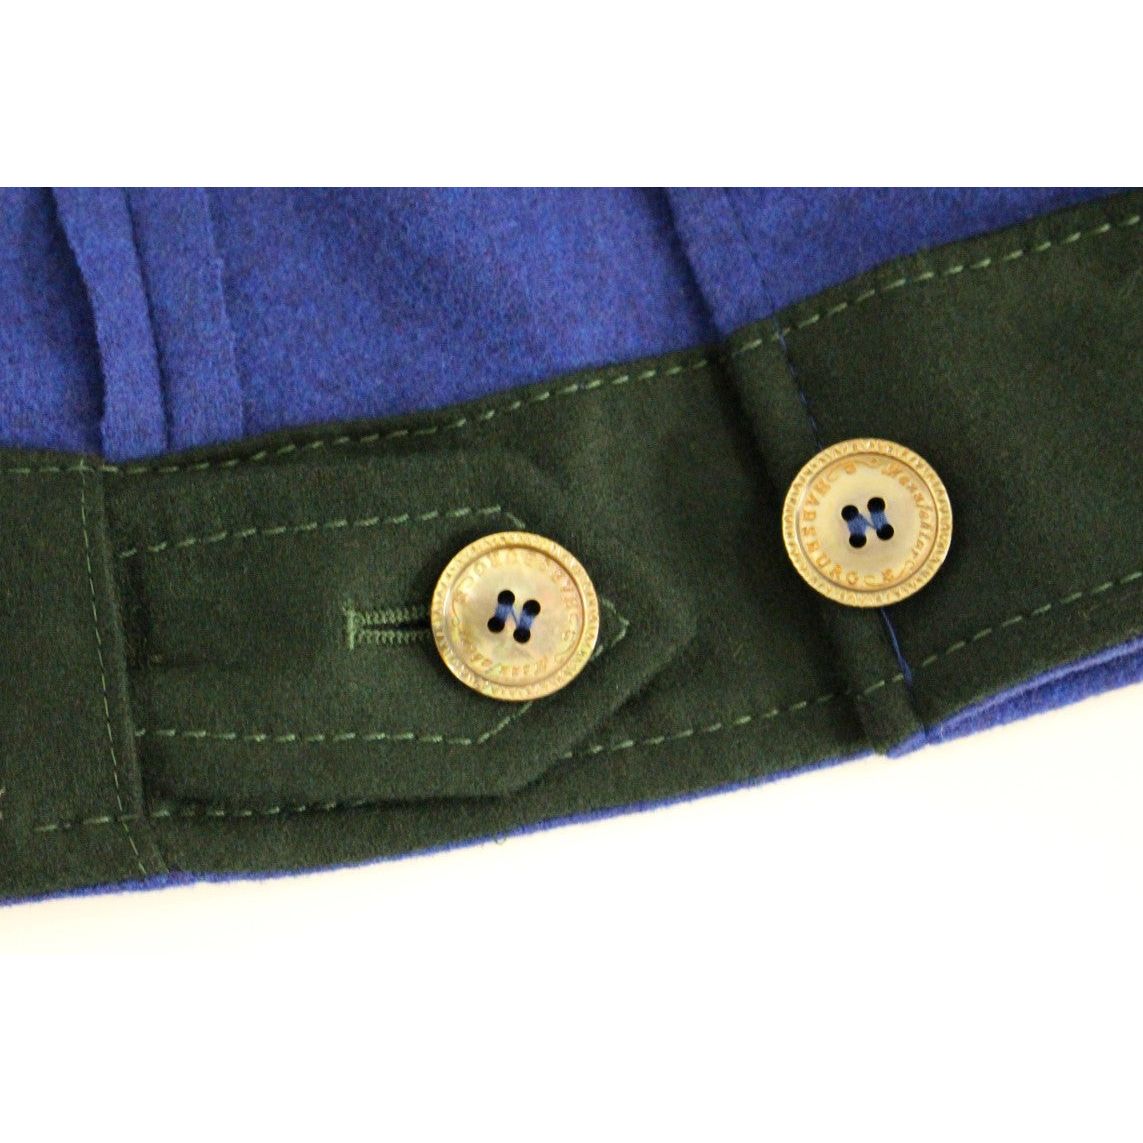 Andrea Incontri Elegant Blue Wool Jacket with Removable Collar Coats & Jackets habsburg-blue-green-wool-jacket-coat 148686-habsburg-blue-green-wool-jacket-coat-7.jpg